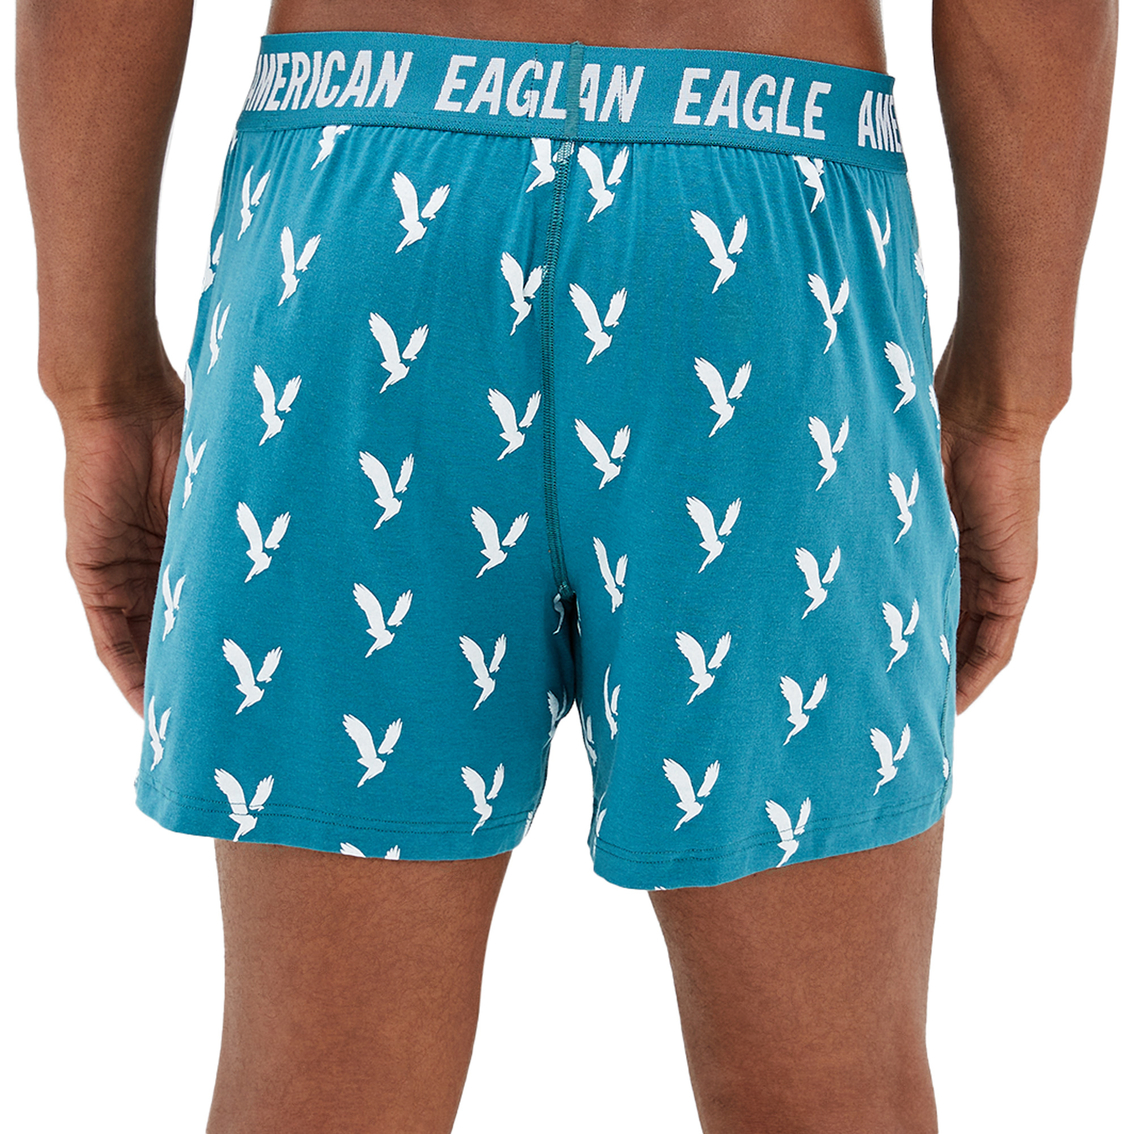 American Eagle Eagle Ultra Soft Boxer Shorts